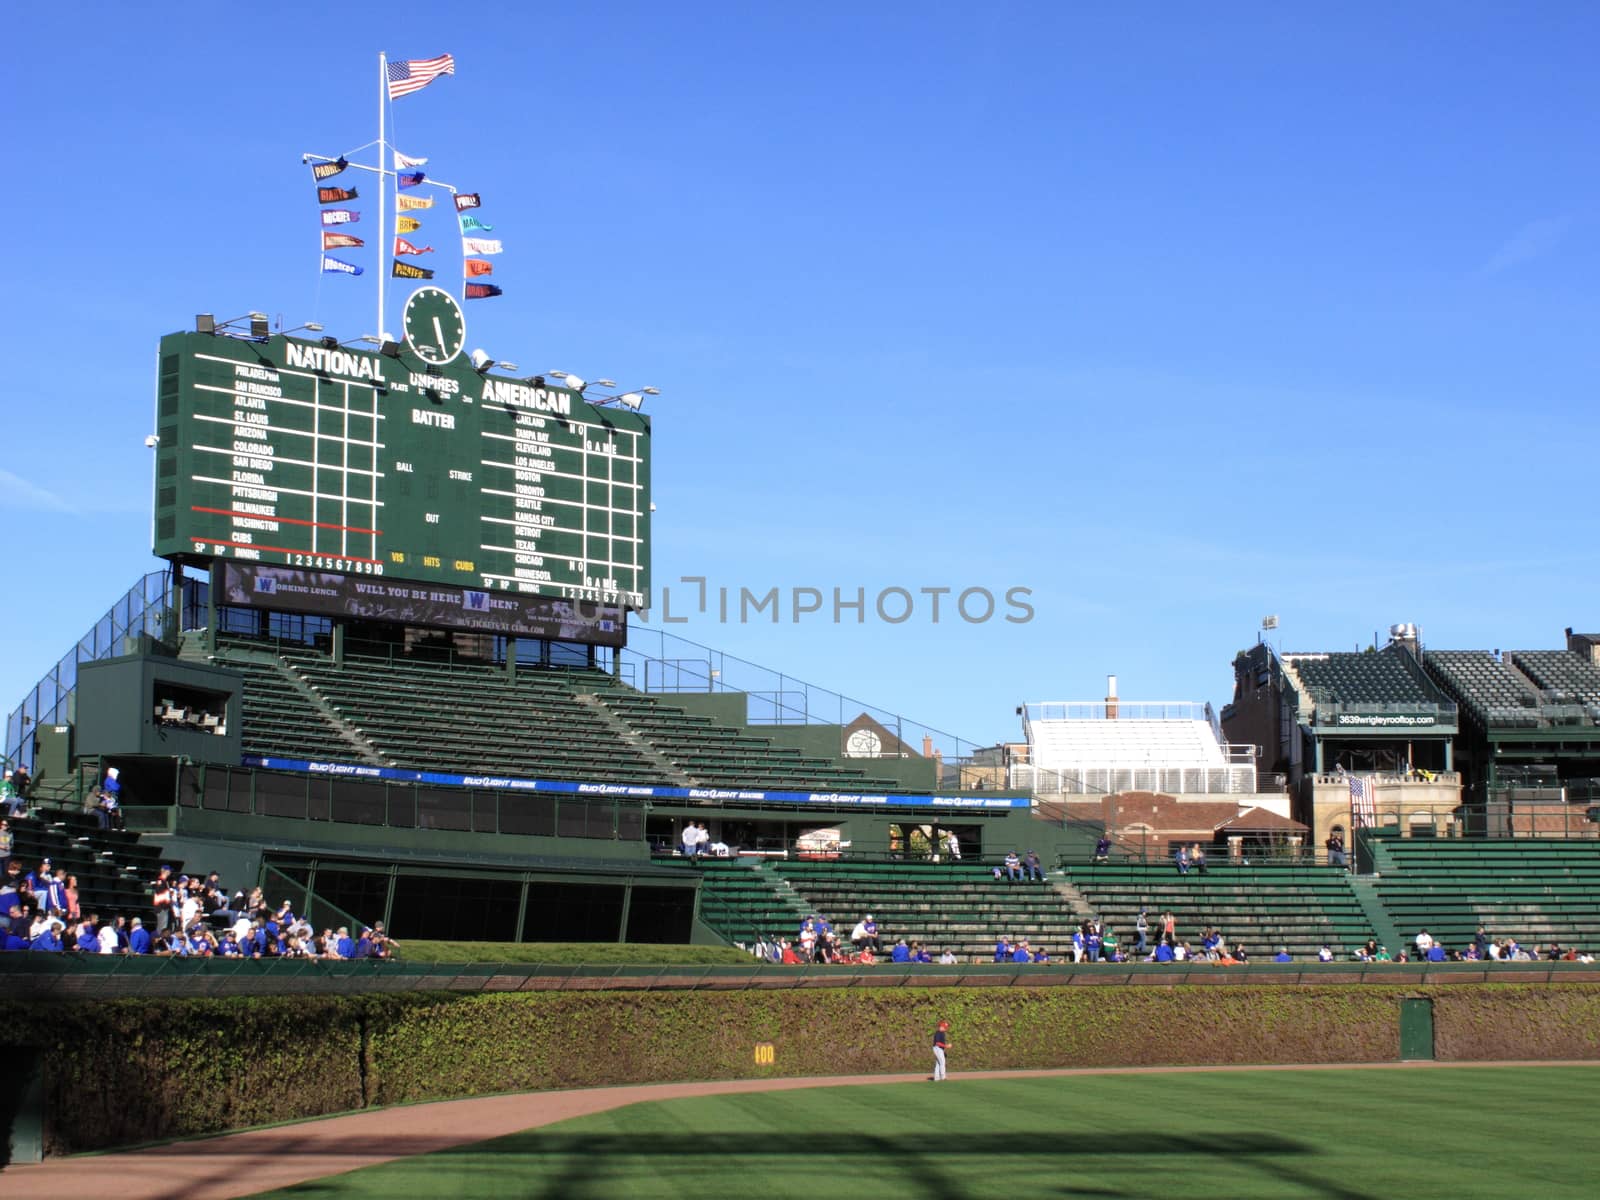 Wrigley Field bleacher fans watch an early season Cubs baseball game in Chicago.